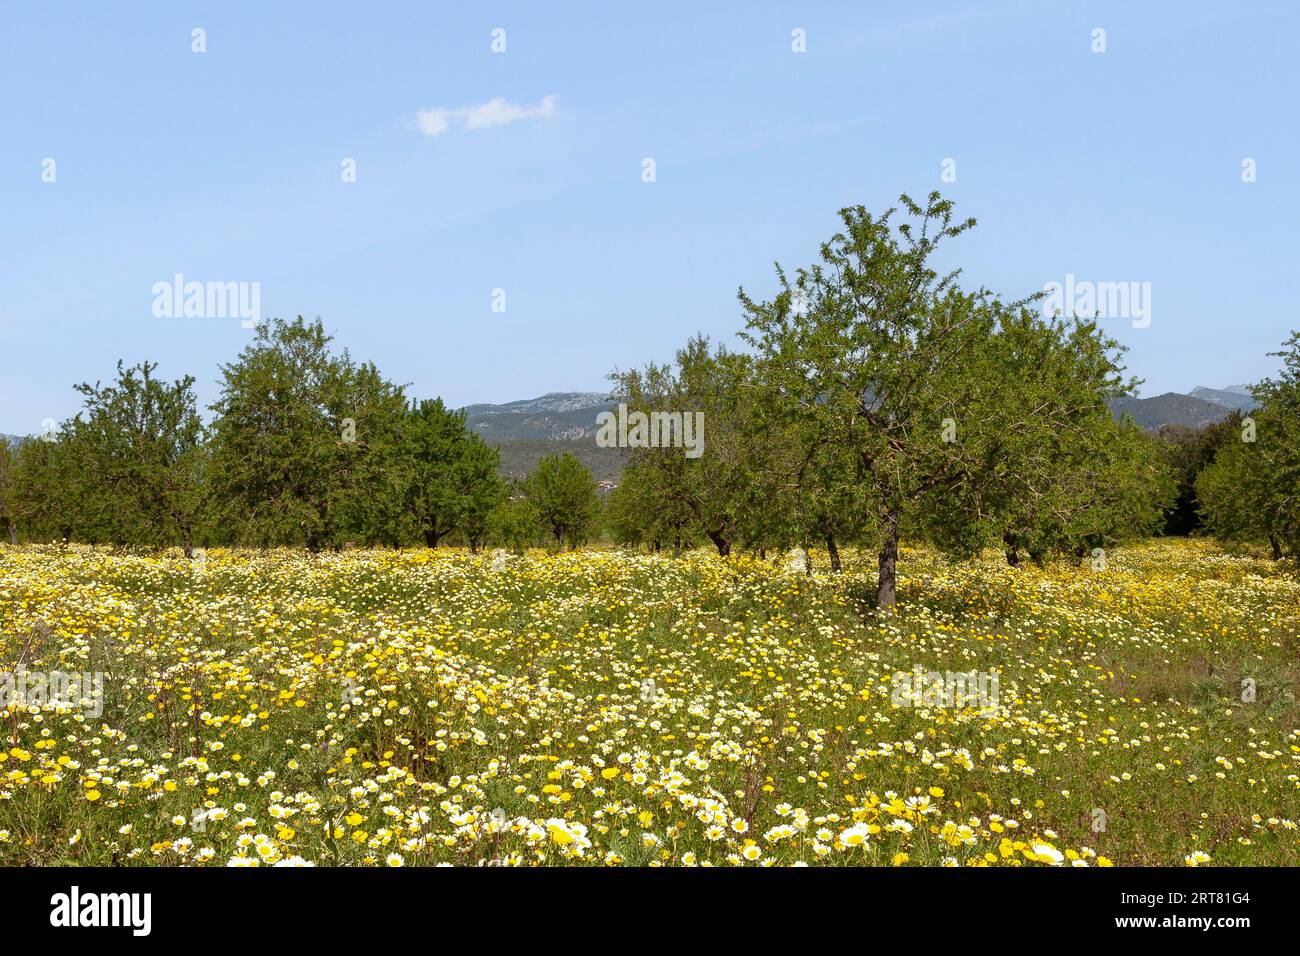 Flowering meadow with crownwort (Glebionis coronaria), almond trees (Prunus dulcis) and holm oaks, Majorca, Balearic Islands, Spain Stock Photo